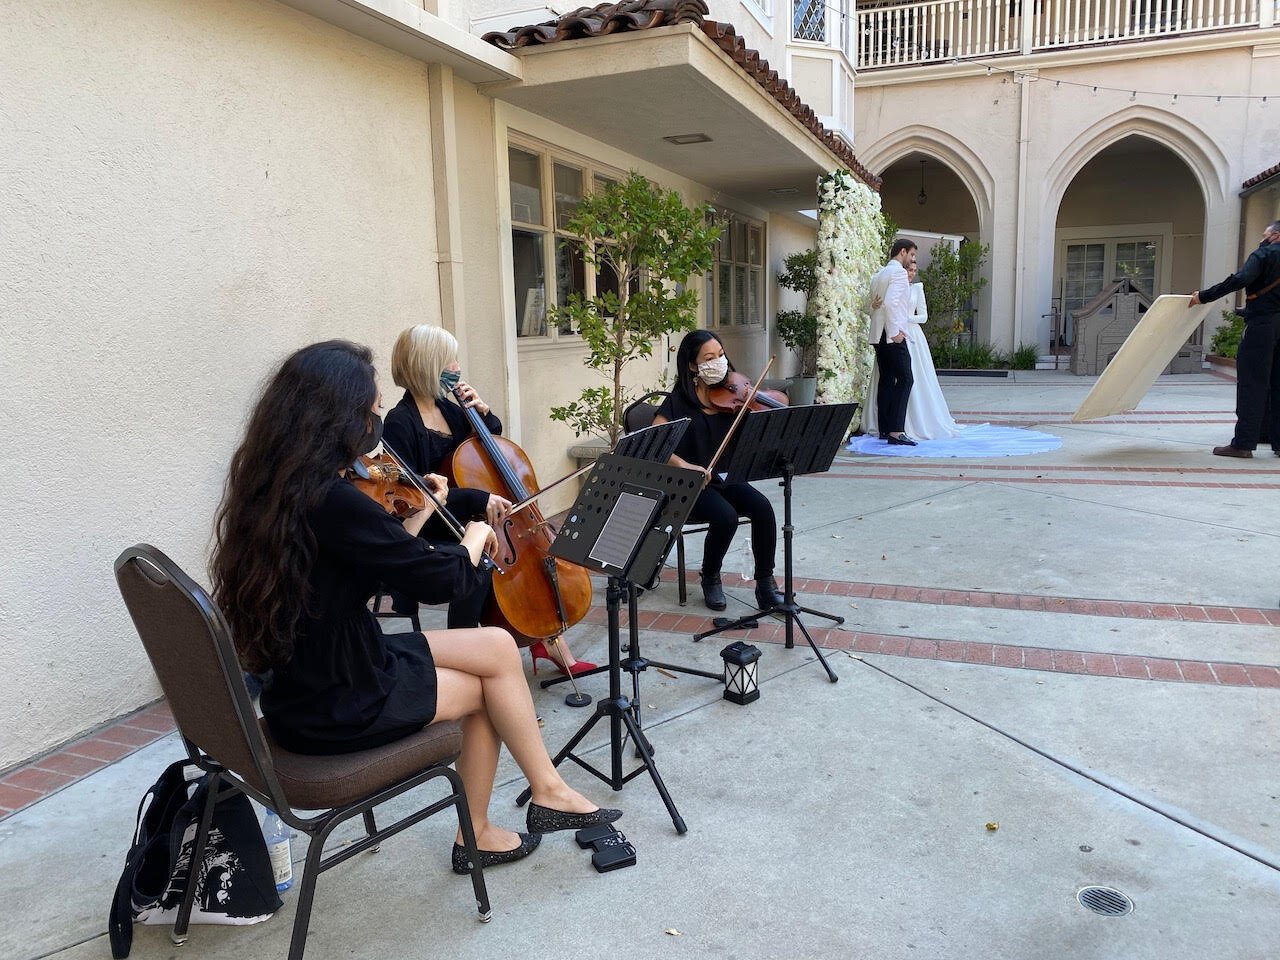 www.santabarbarawedding.com | The Replicas Music | The Cymatics | Professional String Ensemble Playing Outdoor at a Wedding